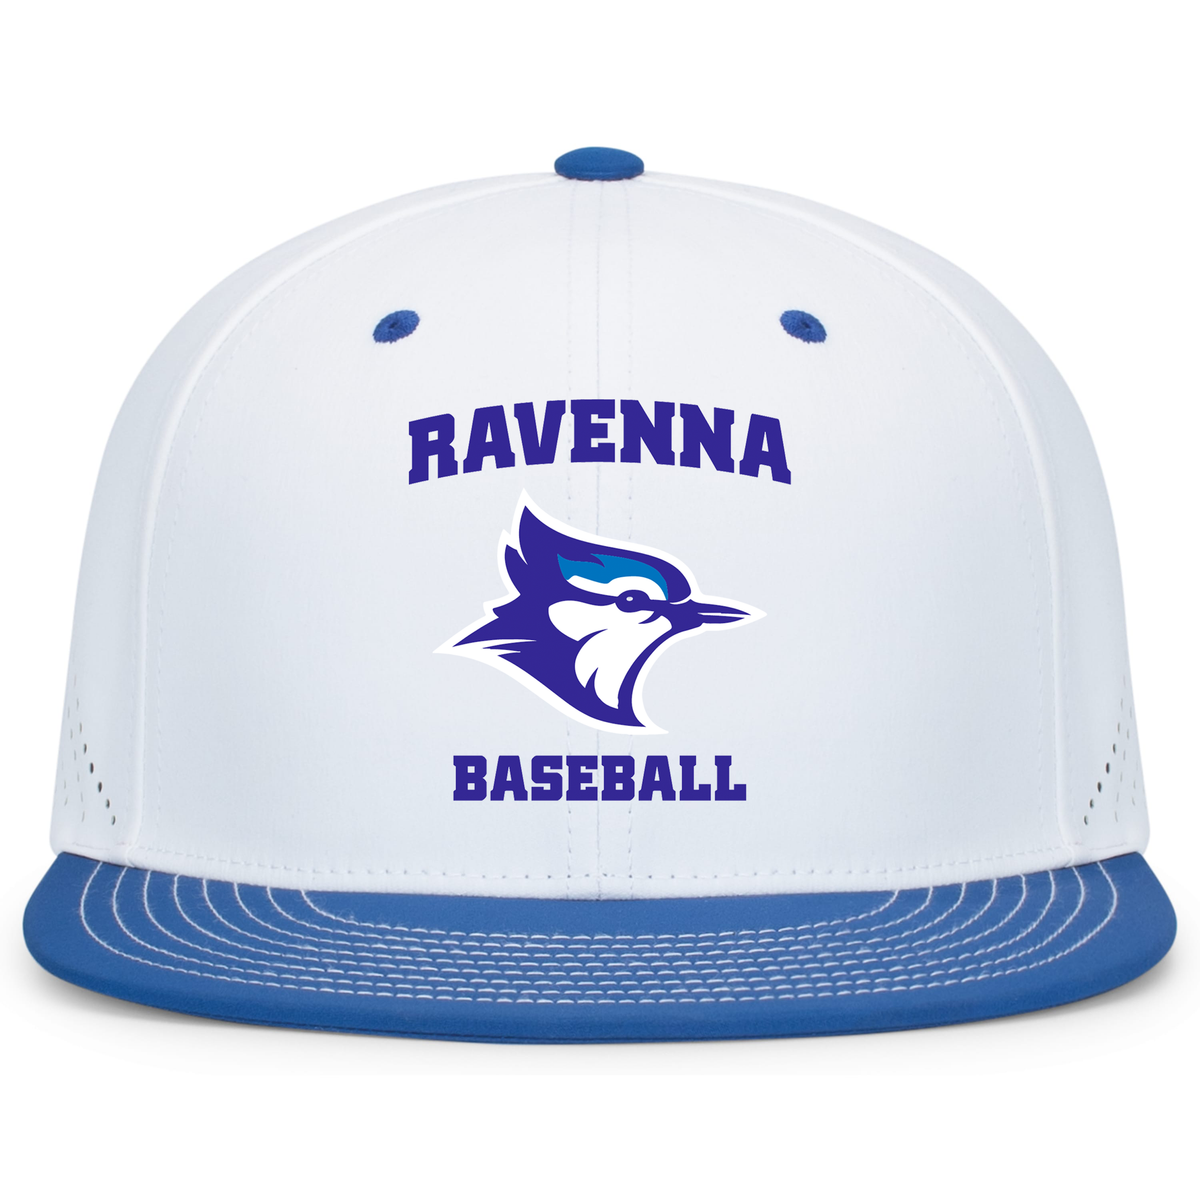 Ravenna Baseball Premium Lightweight Perforated PacFlex CoolCore Cap